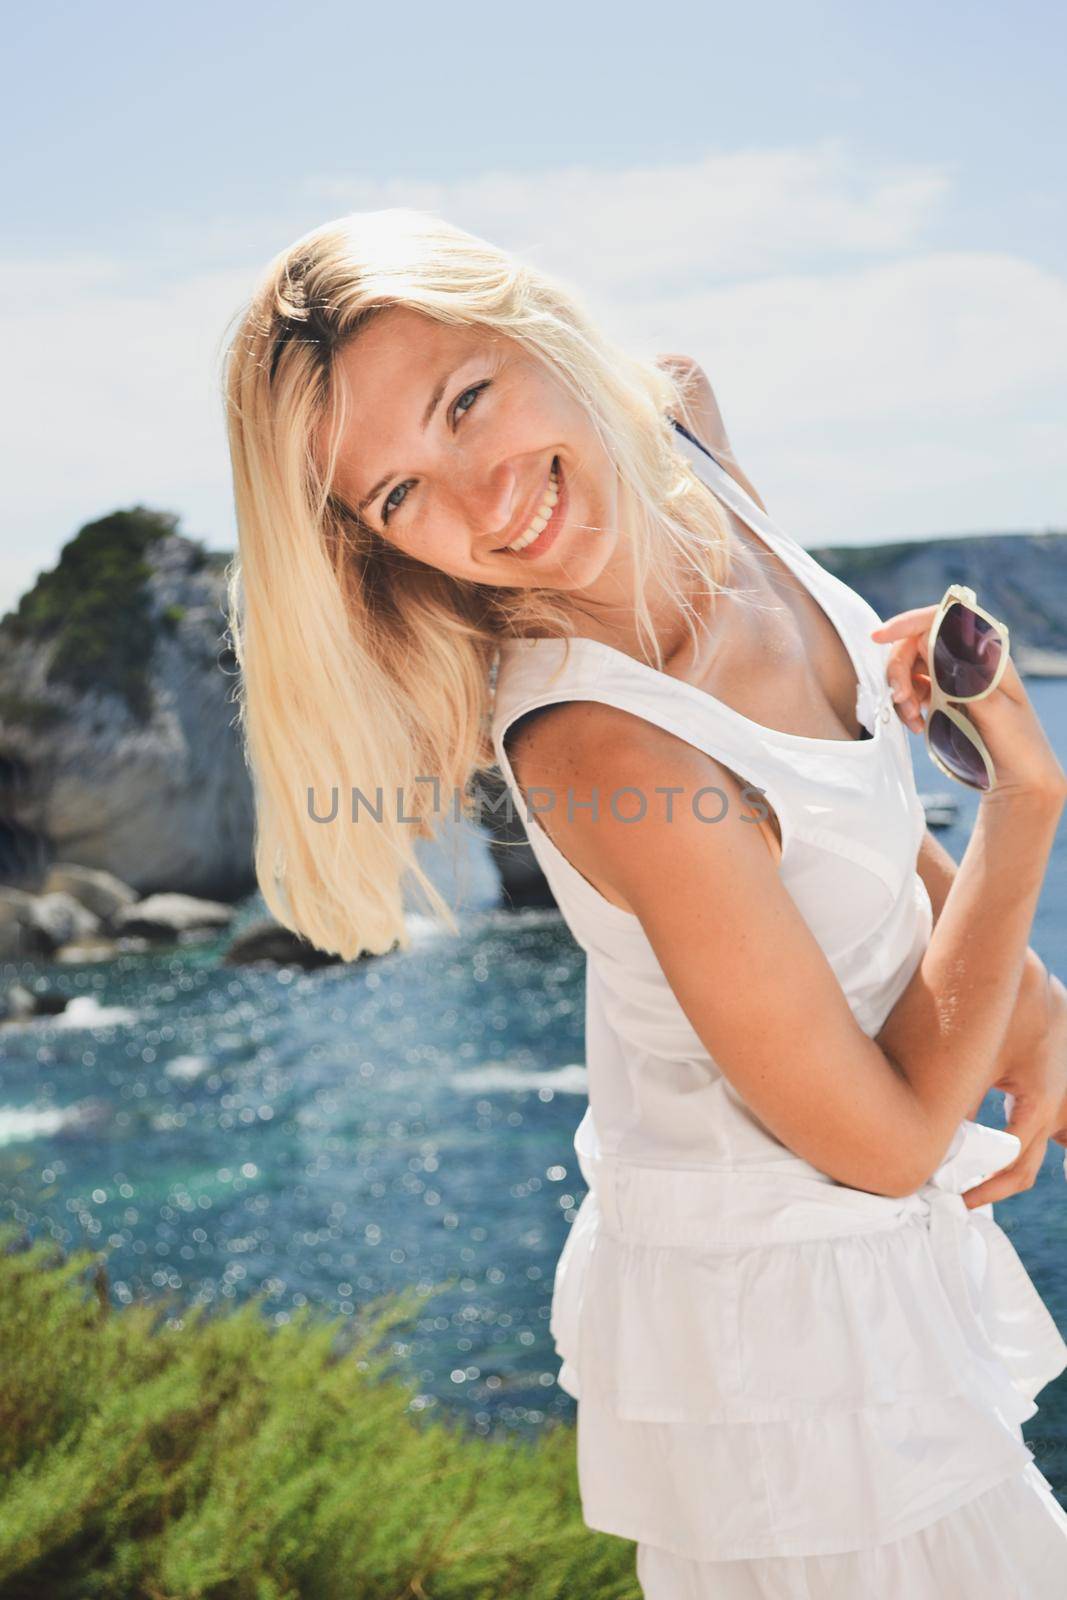 Blonde woman in white dress smiling near the sea by Godi